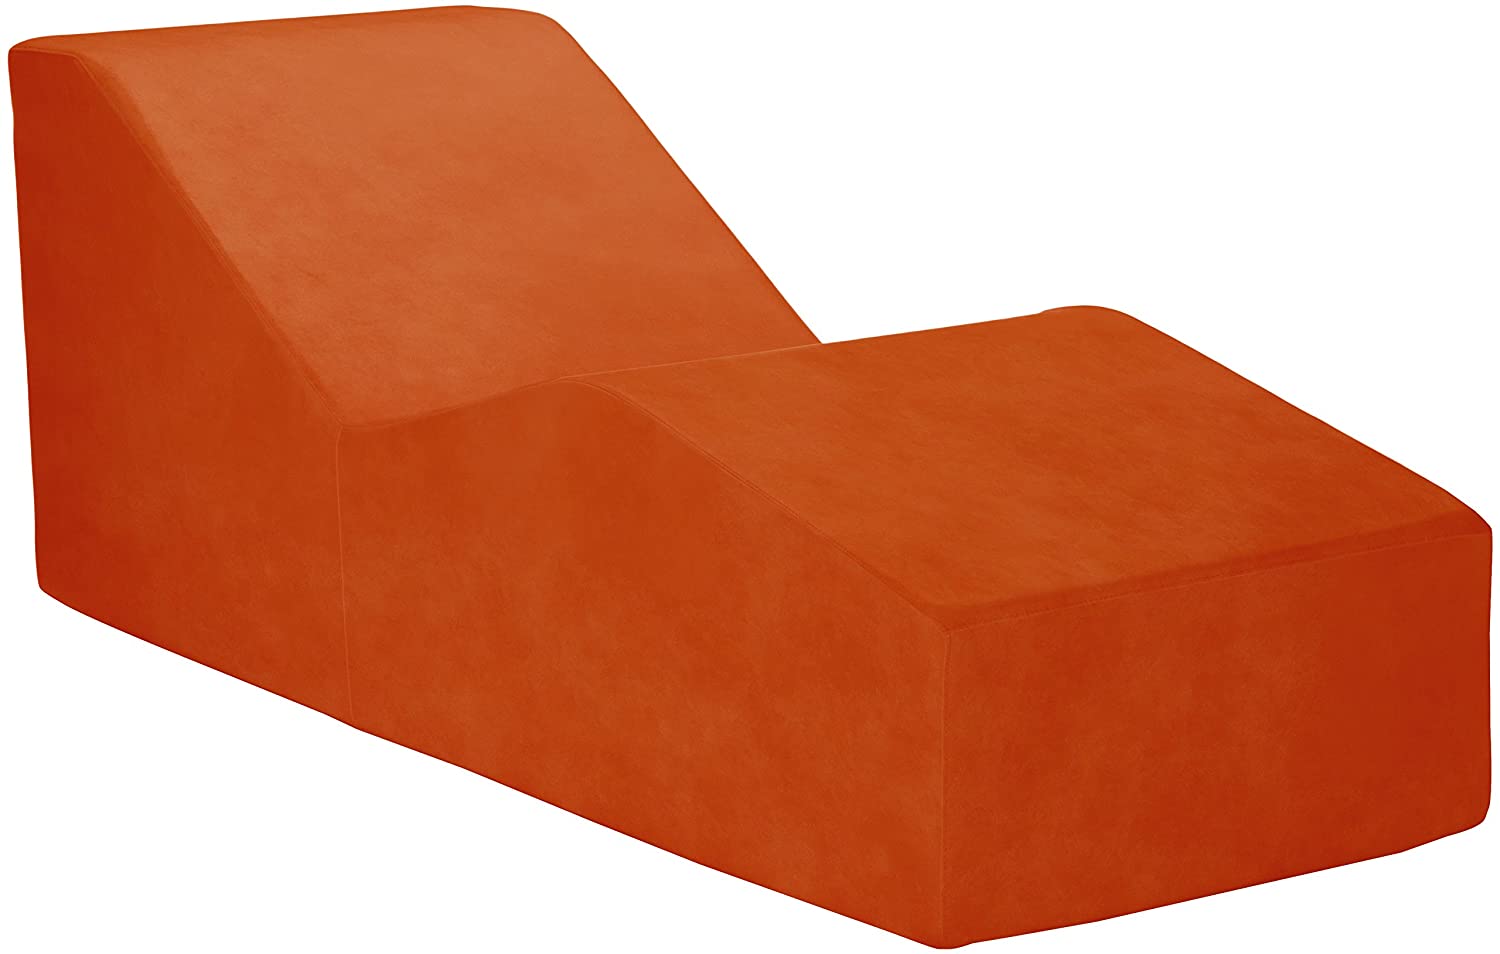 La Fete Design Furniture Wave Chaise at MetropolitanDecor.com